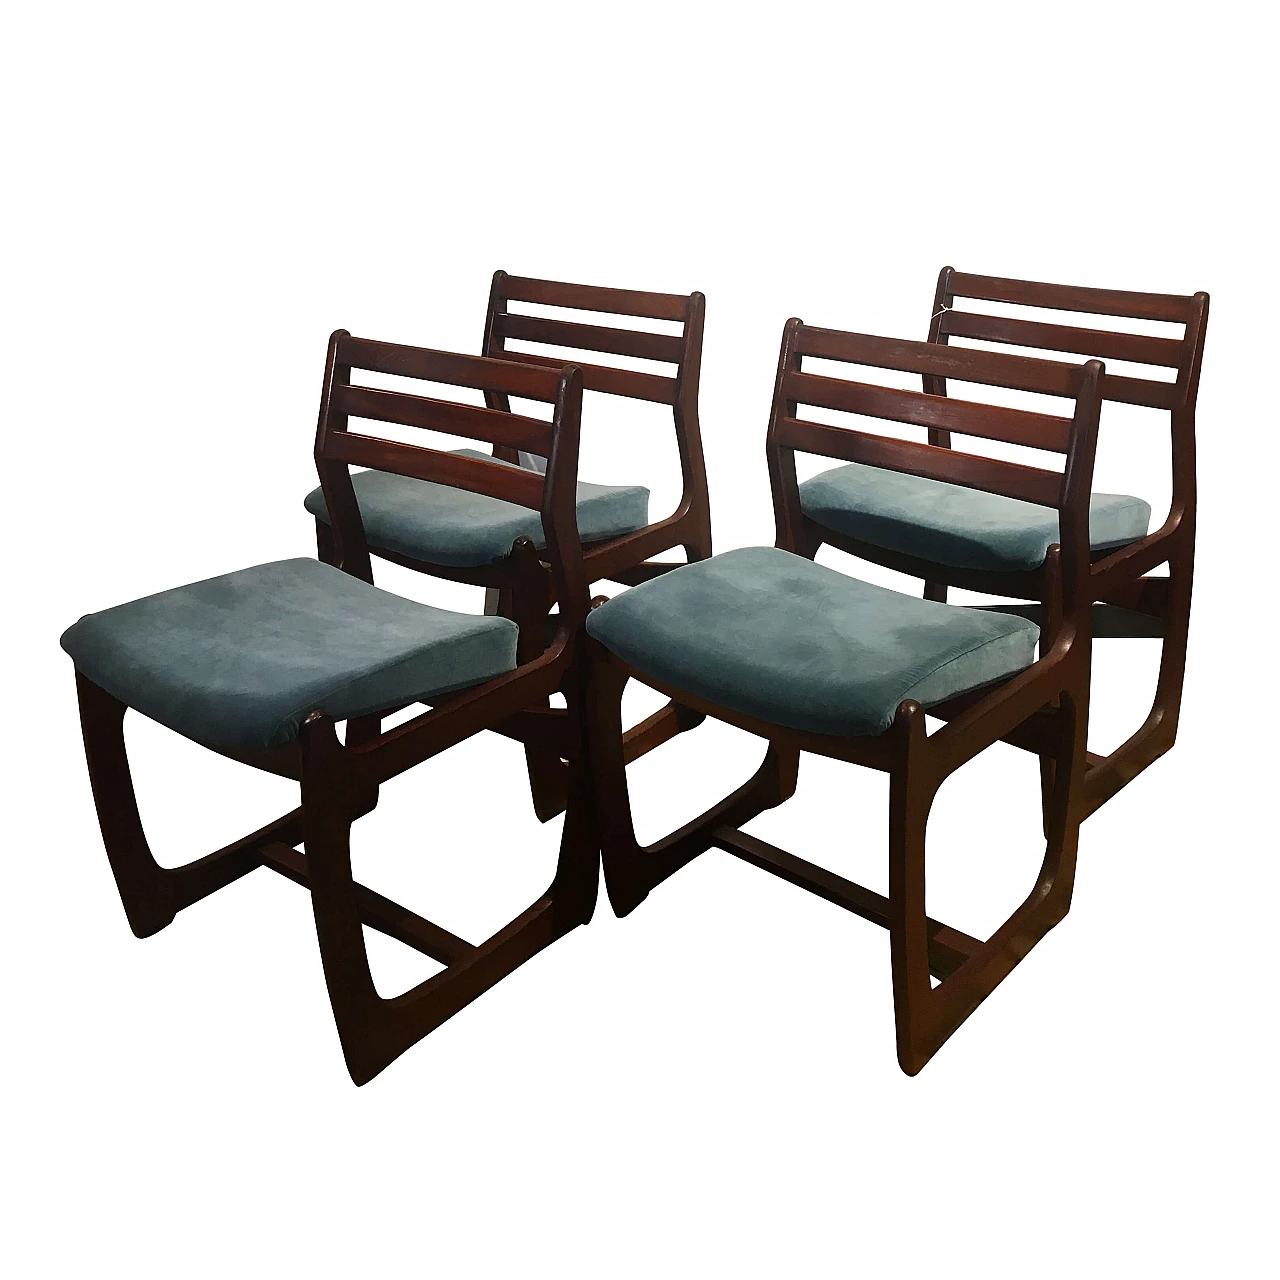 4 English teak and velvet chairs, 1950s 1332930